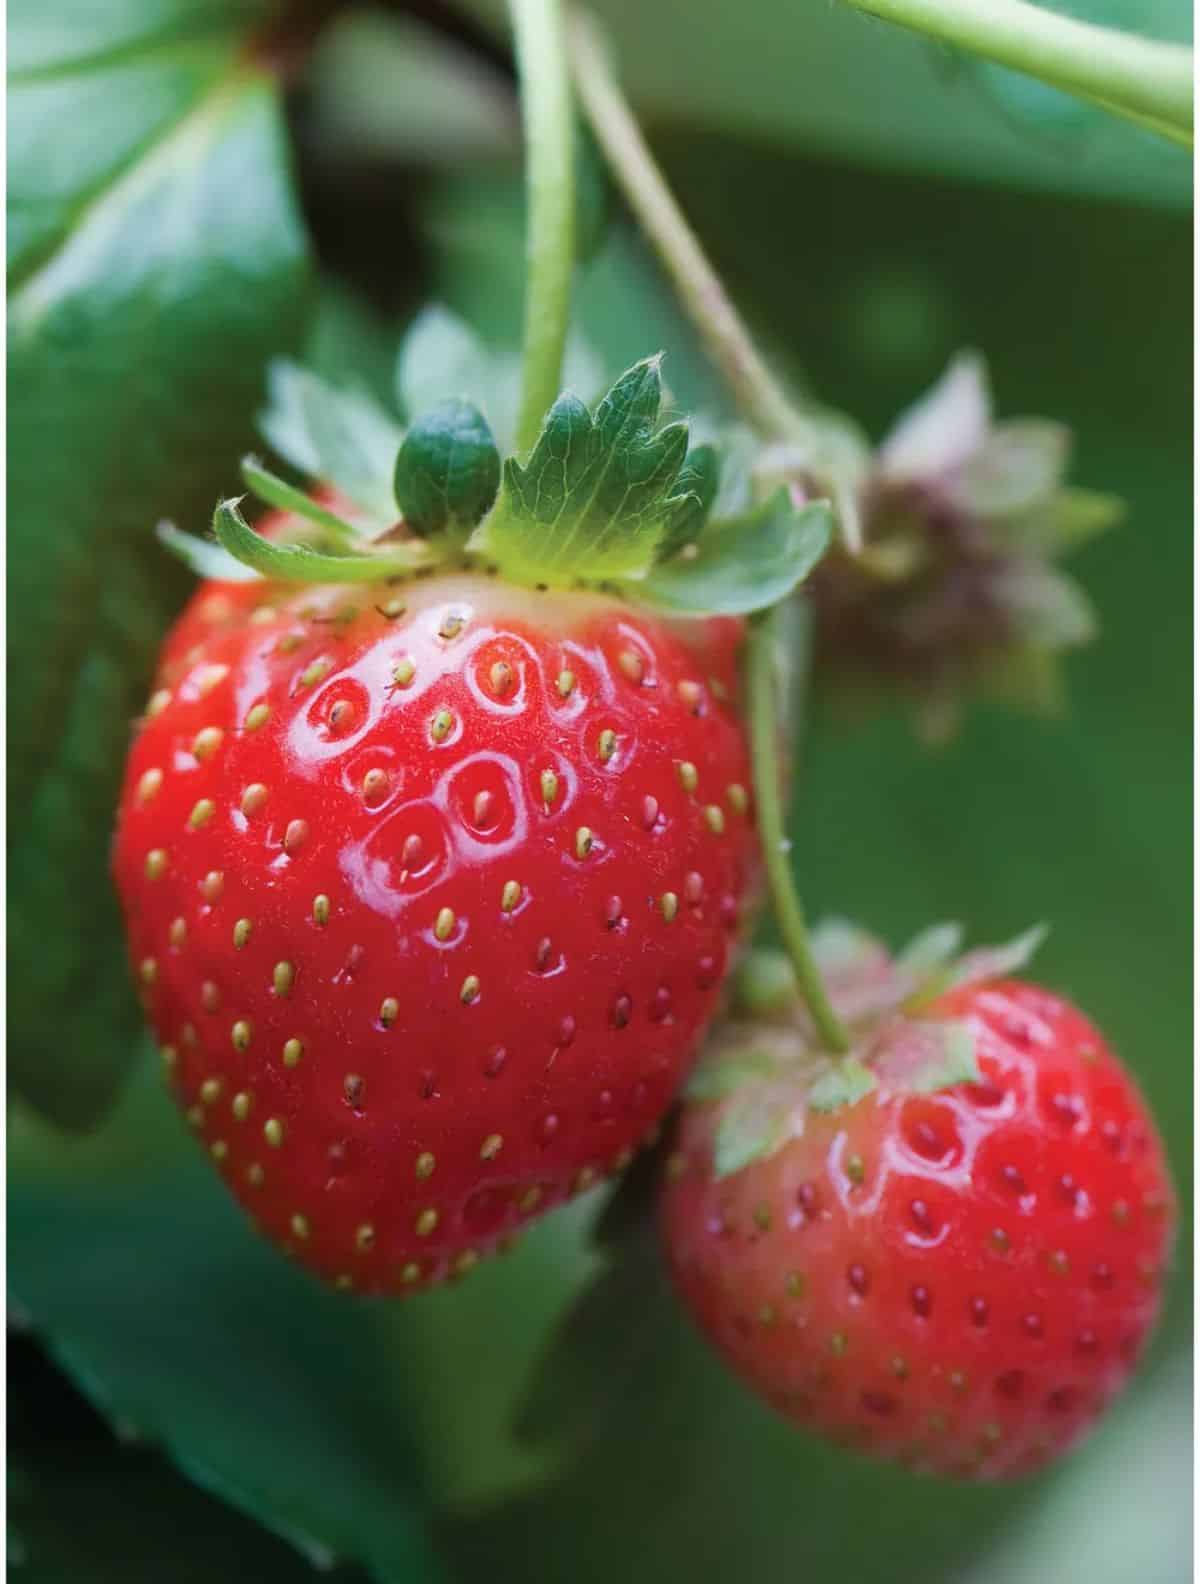 Ripe Mara Des Bois Strawberries on a stem close-up.